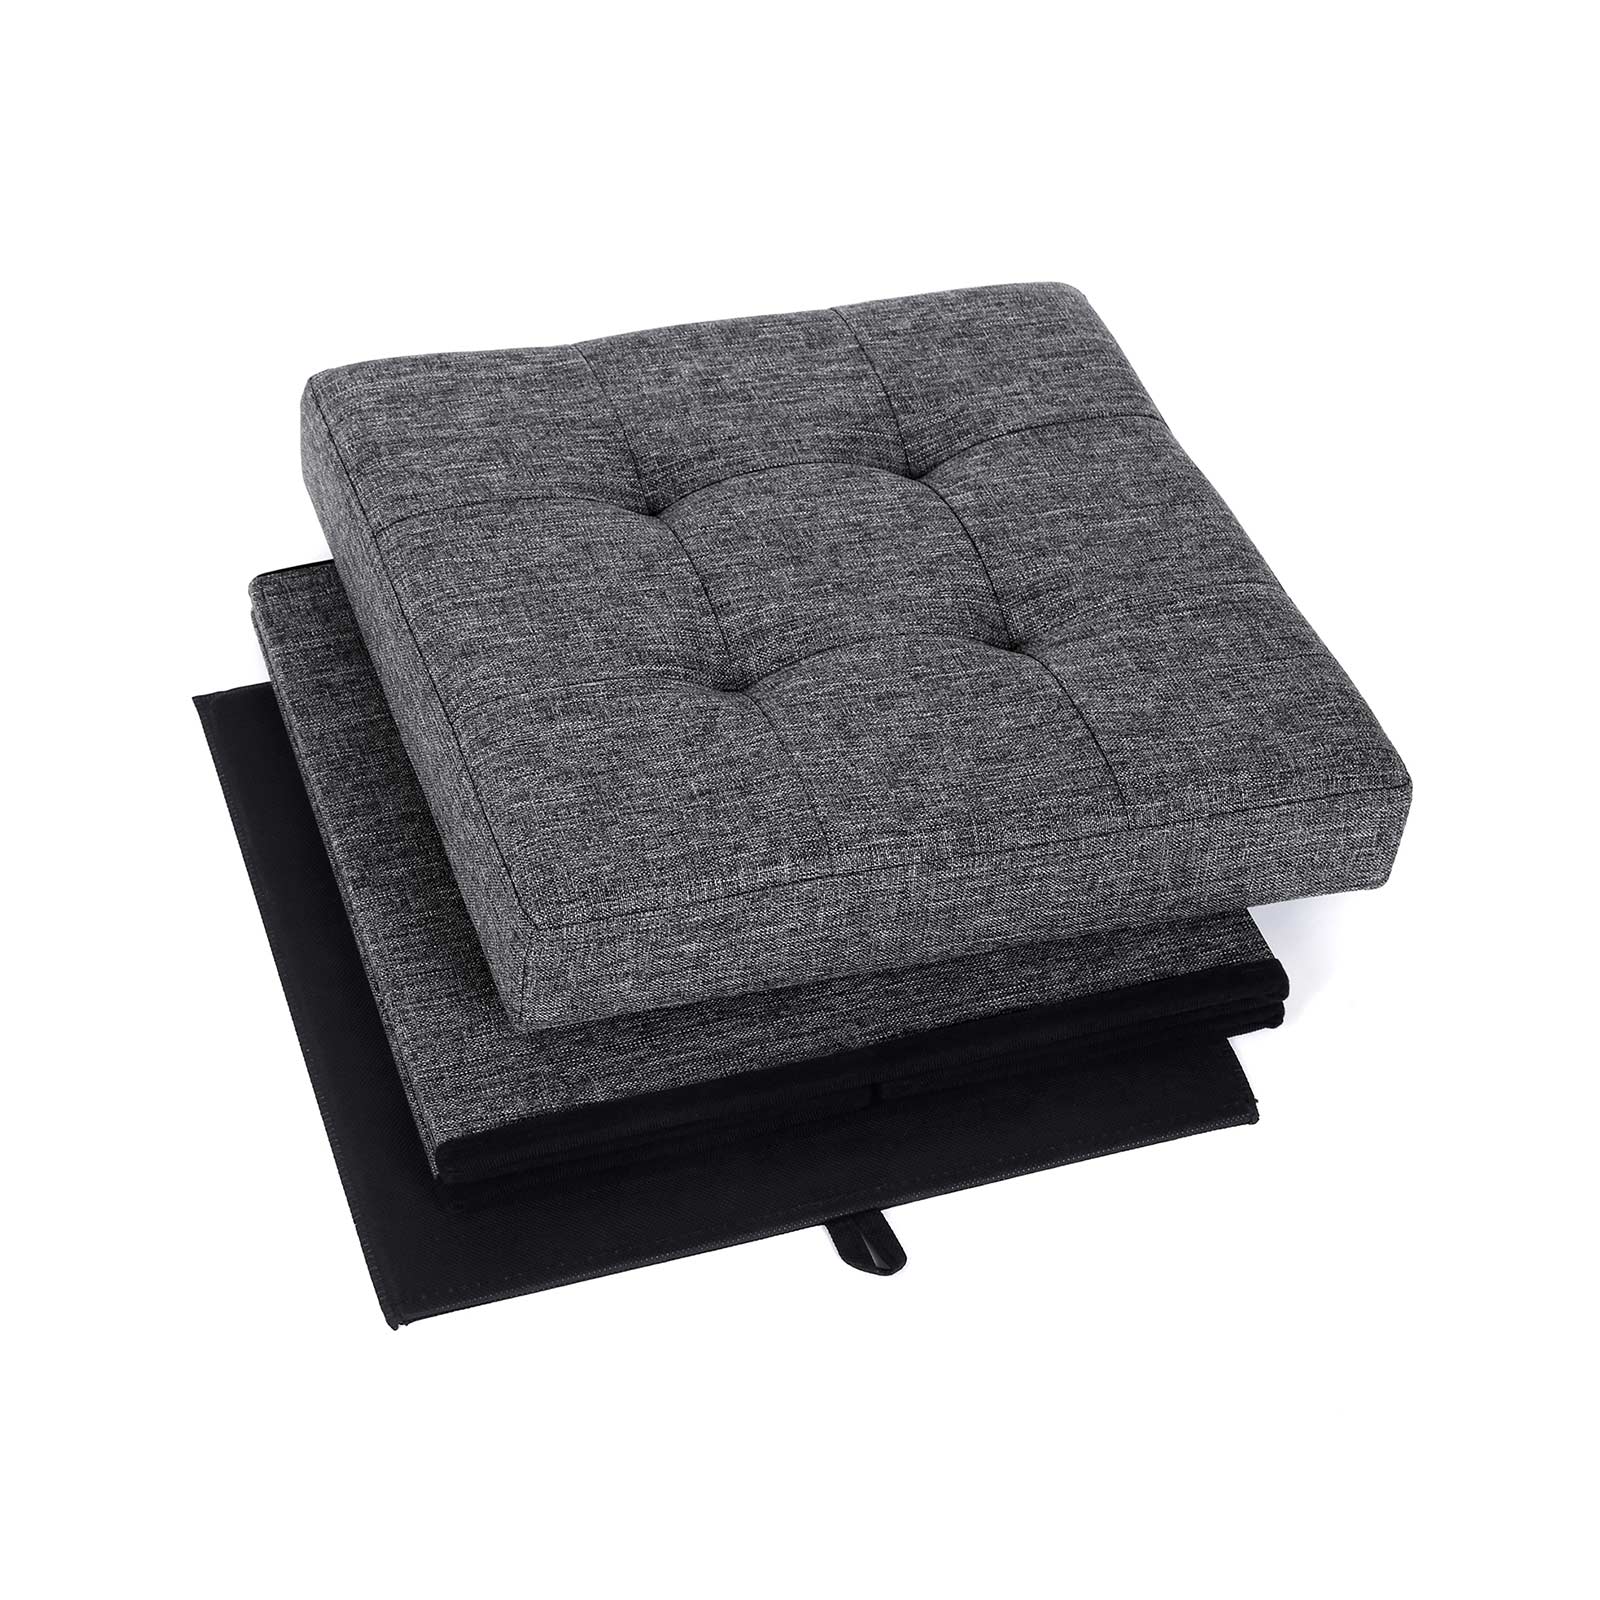 Folding Storage Chest Ottoman Footstool Portable Picnic Seat Versatile Space-saving CubesMax Load 300 kg, 4